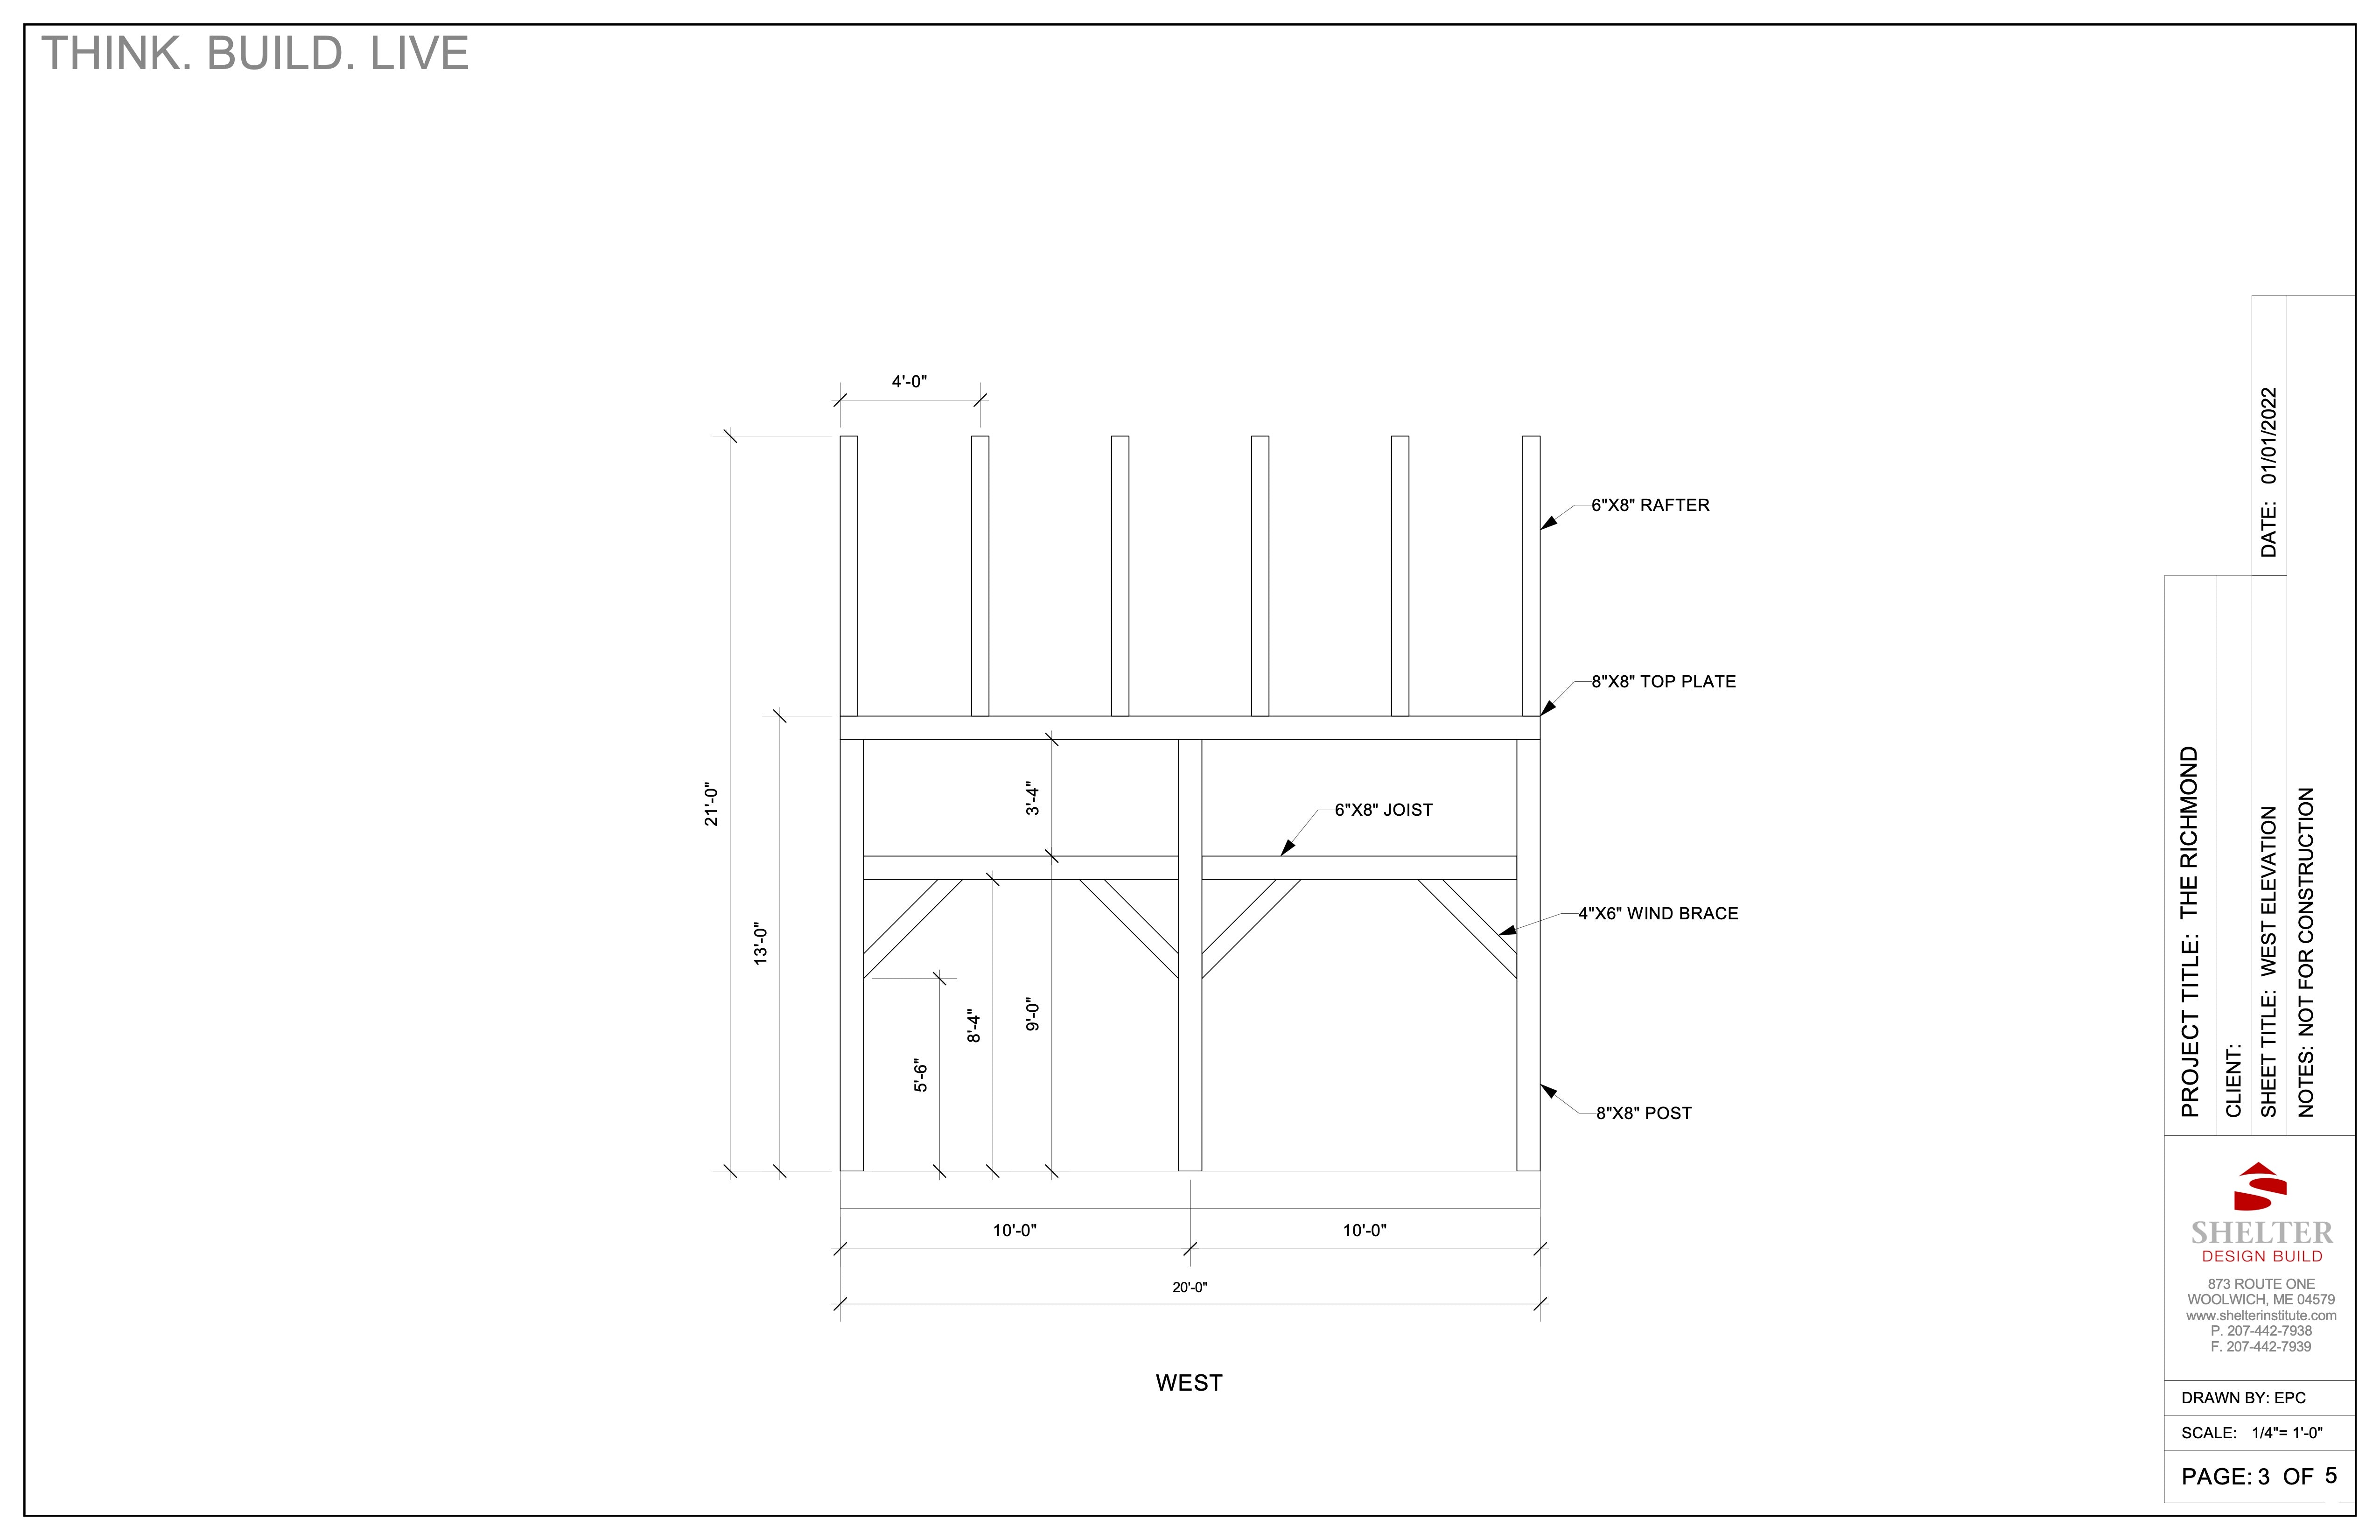 The Richmond: Timber Frame Cut sheet Package 16x20